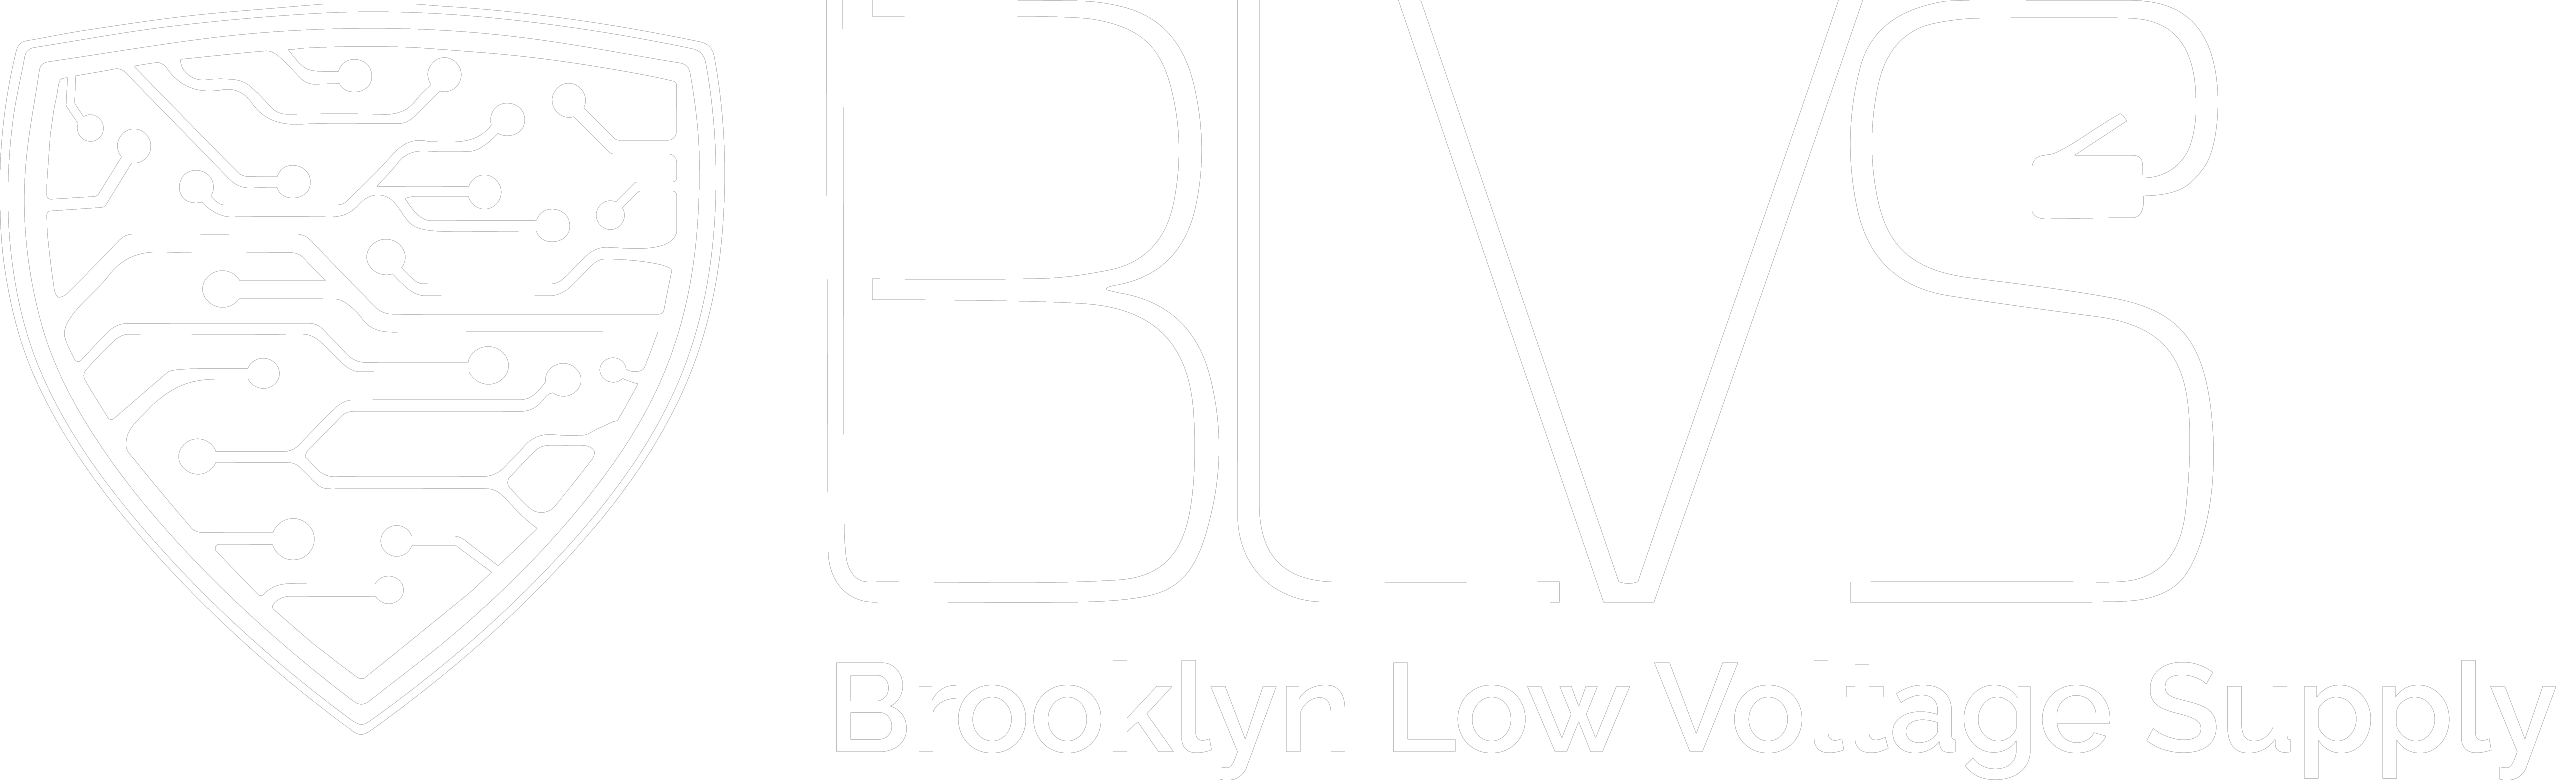 Blvs Logo